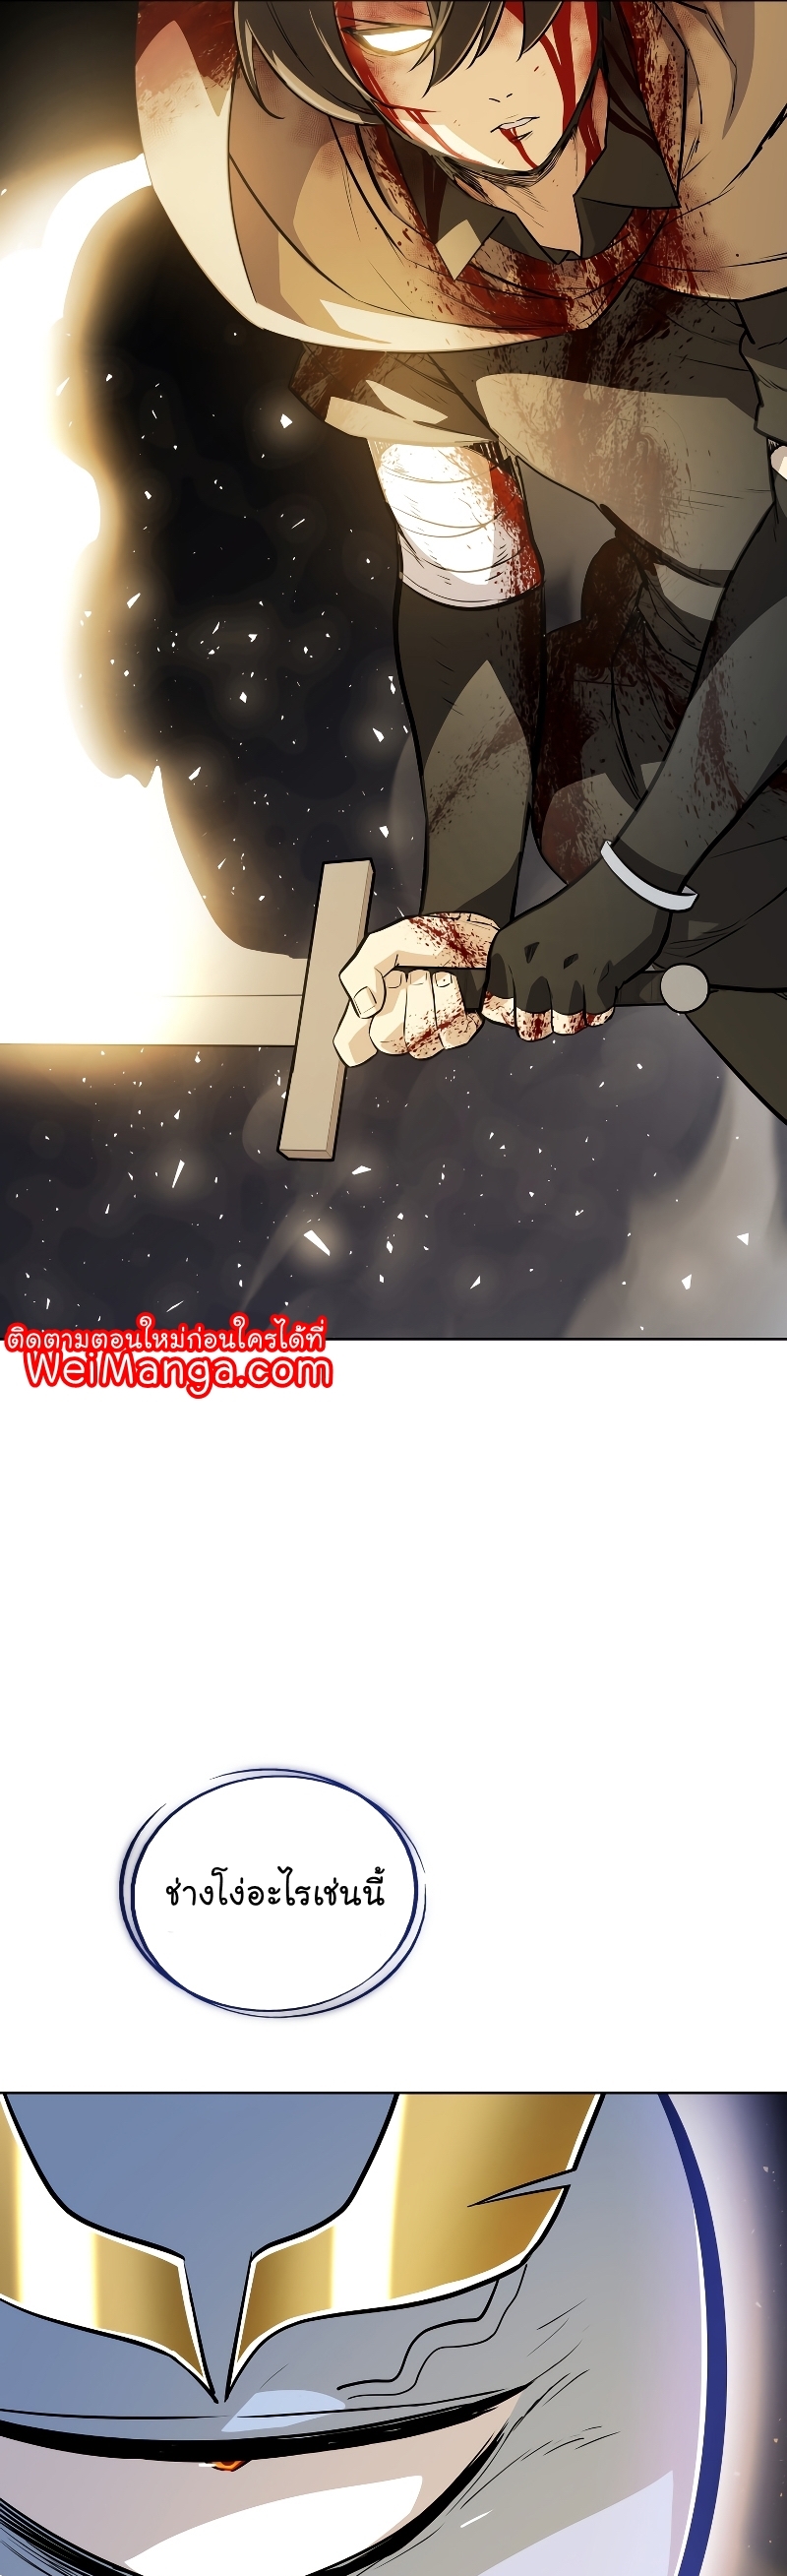 Overpower Sword Manga Wei 81 (21)